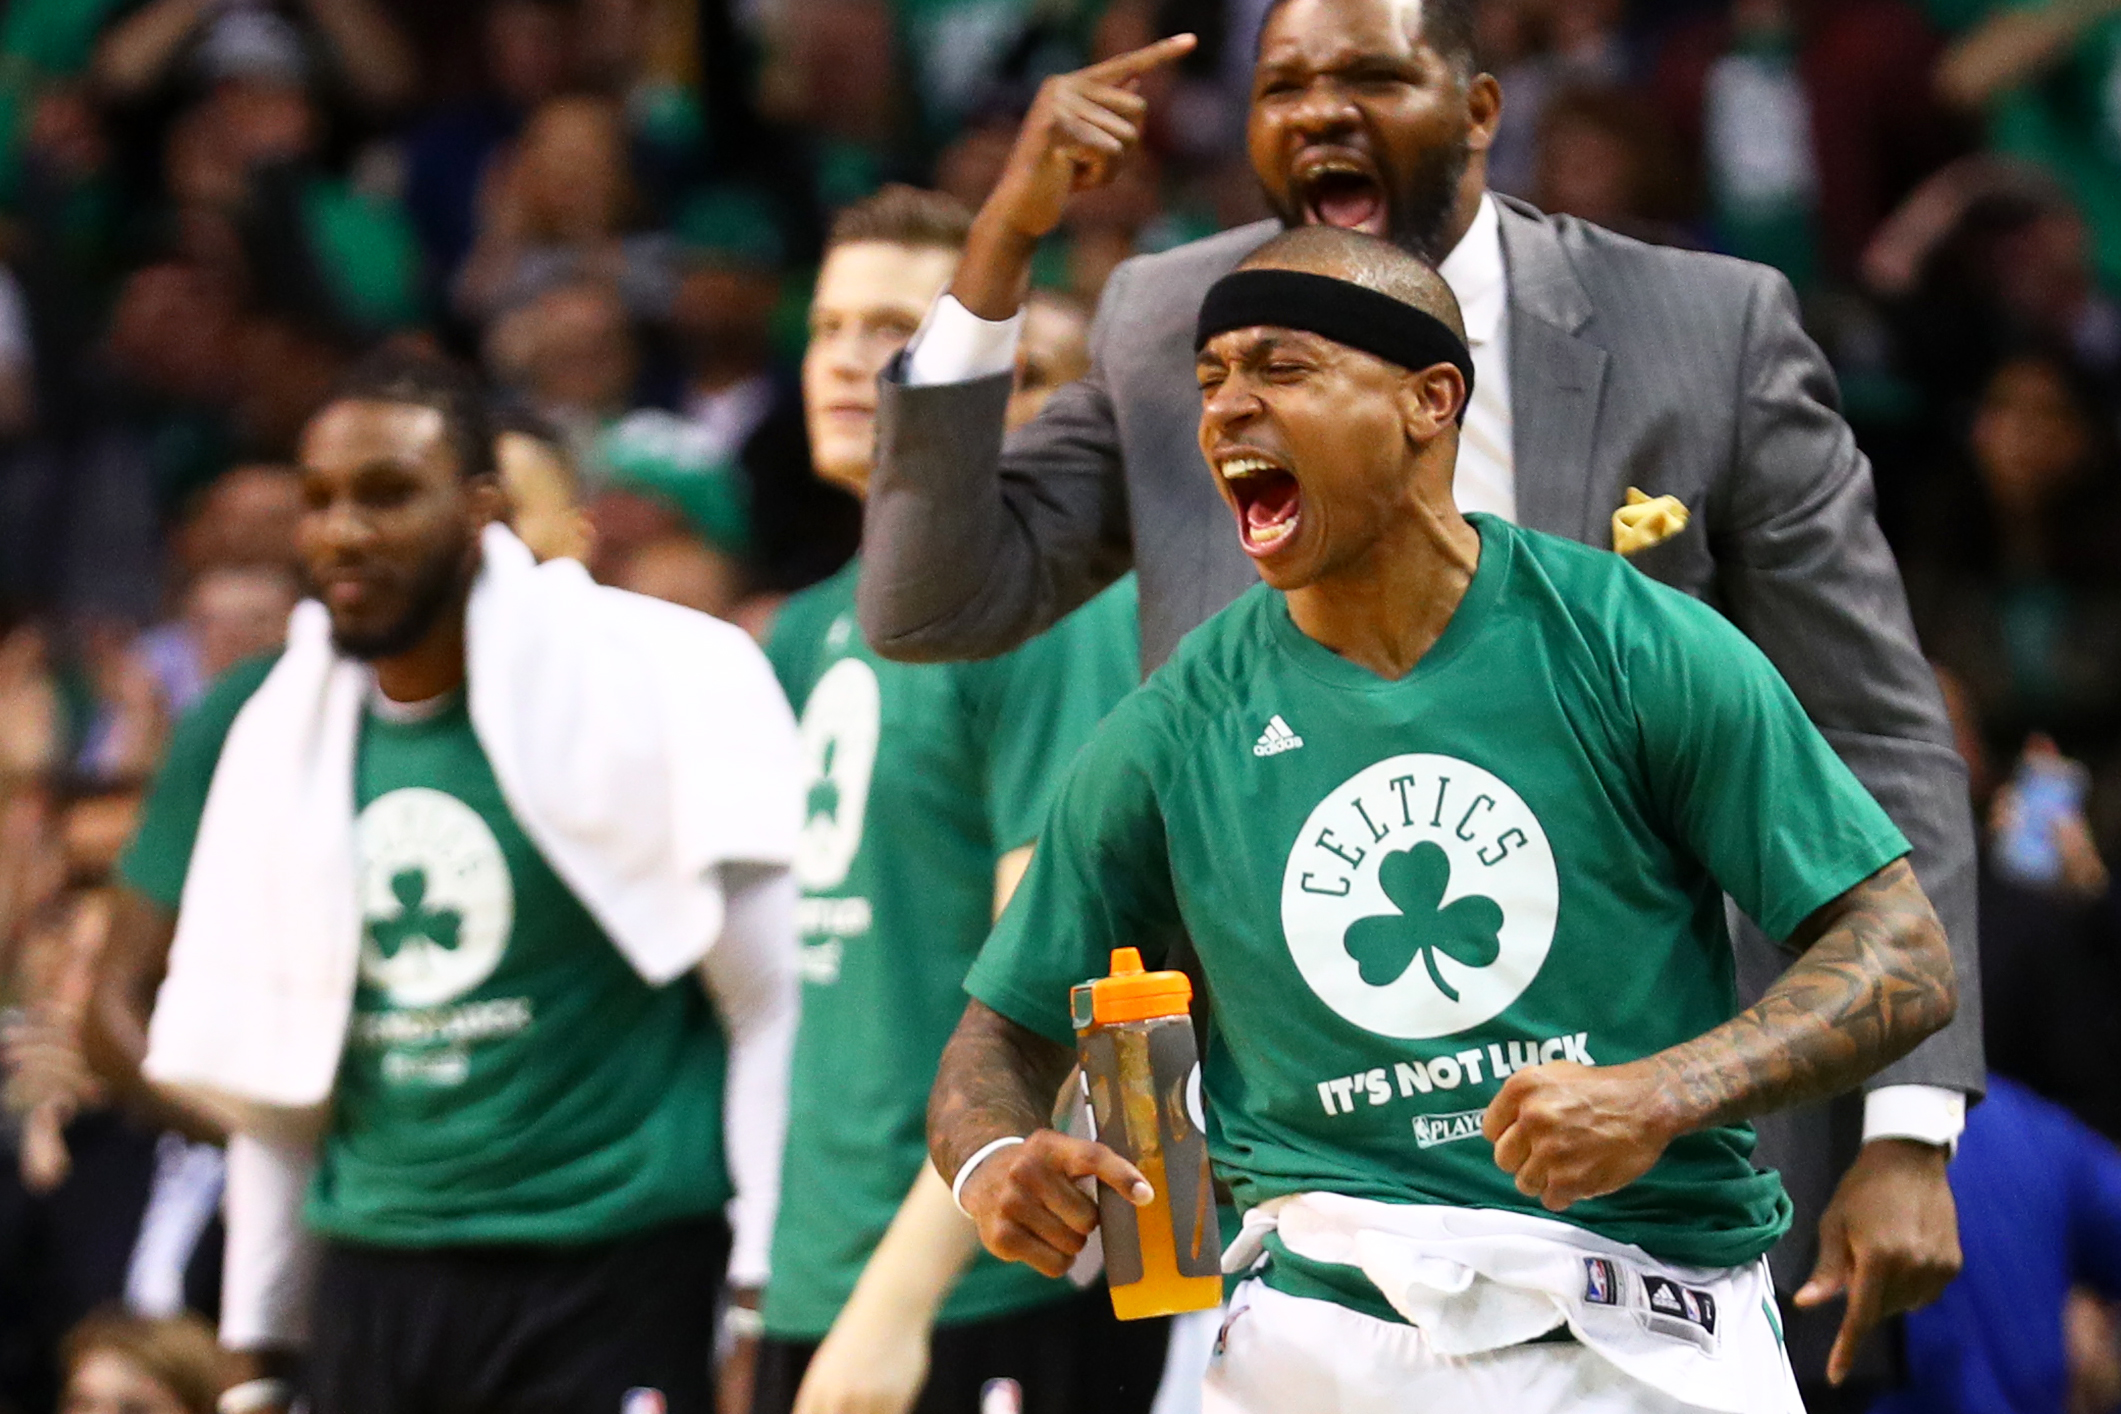 The Boston Celtics should give Isaiah Thomas another shot.